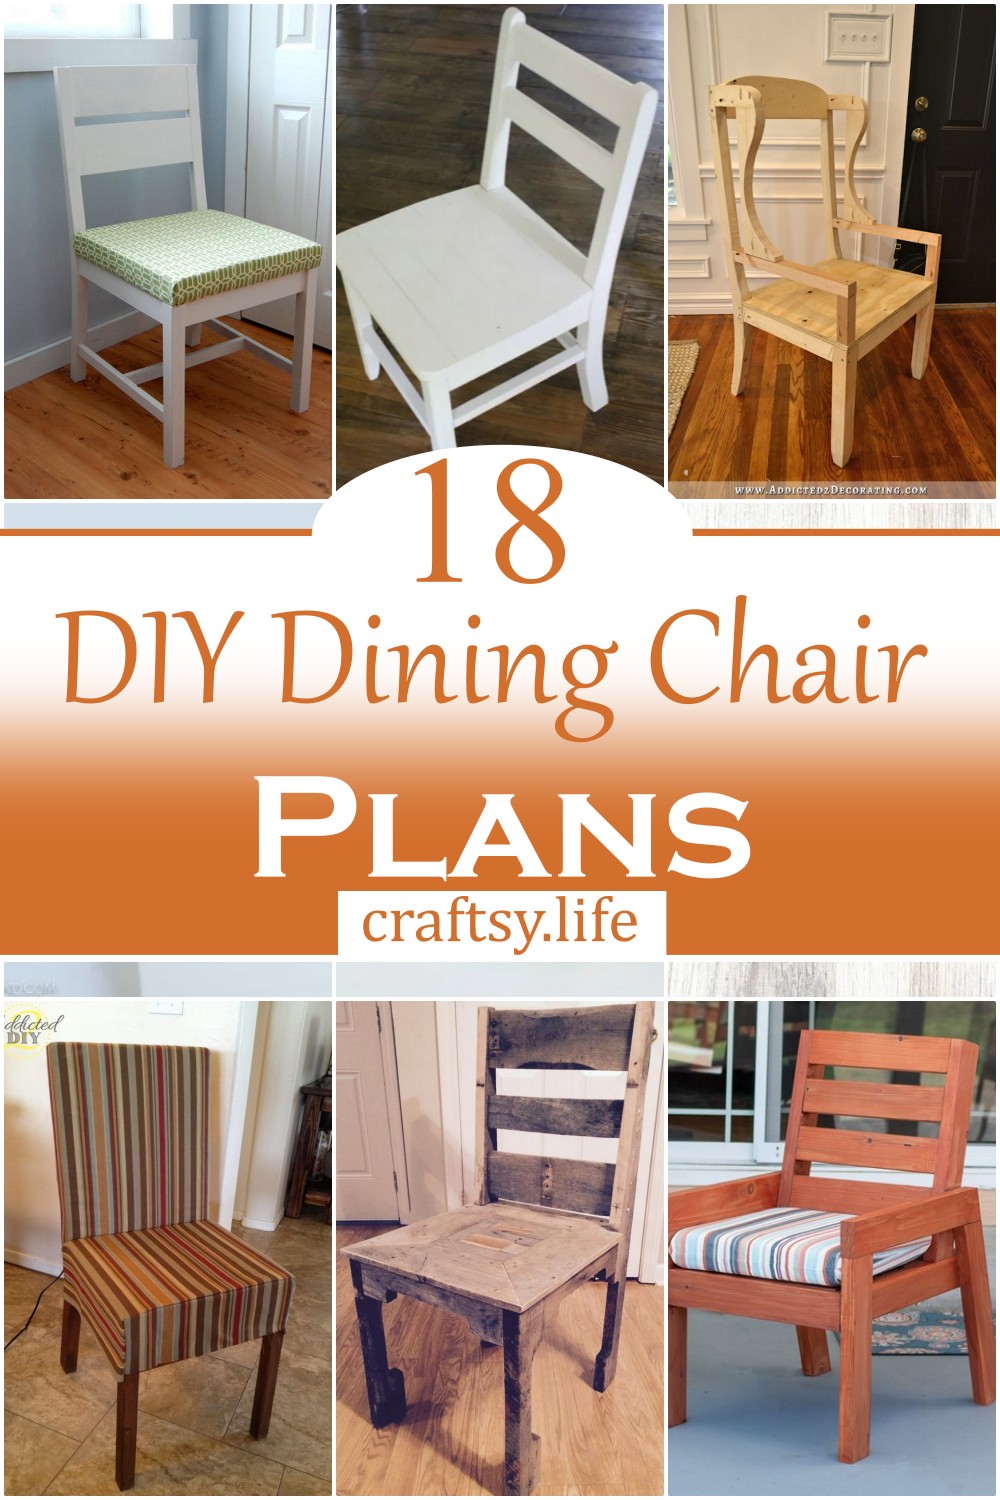 DIY Dining Chair Plans